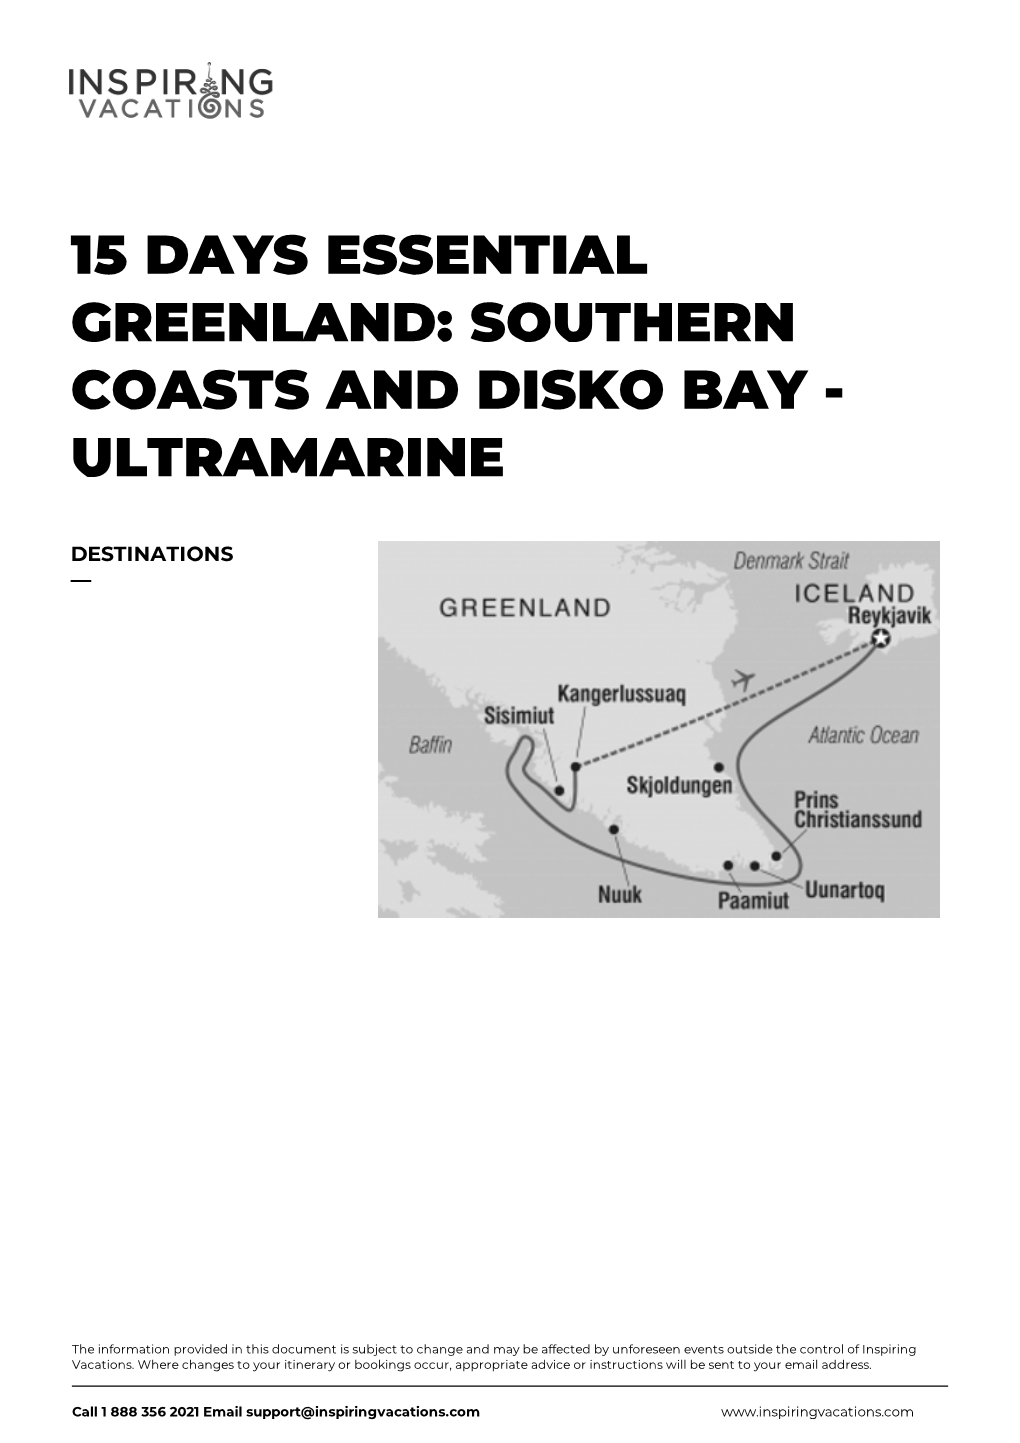 15 Days Essential Greenland: Southern Coasts and Disko Bay - Ultramarine